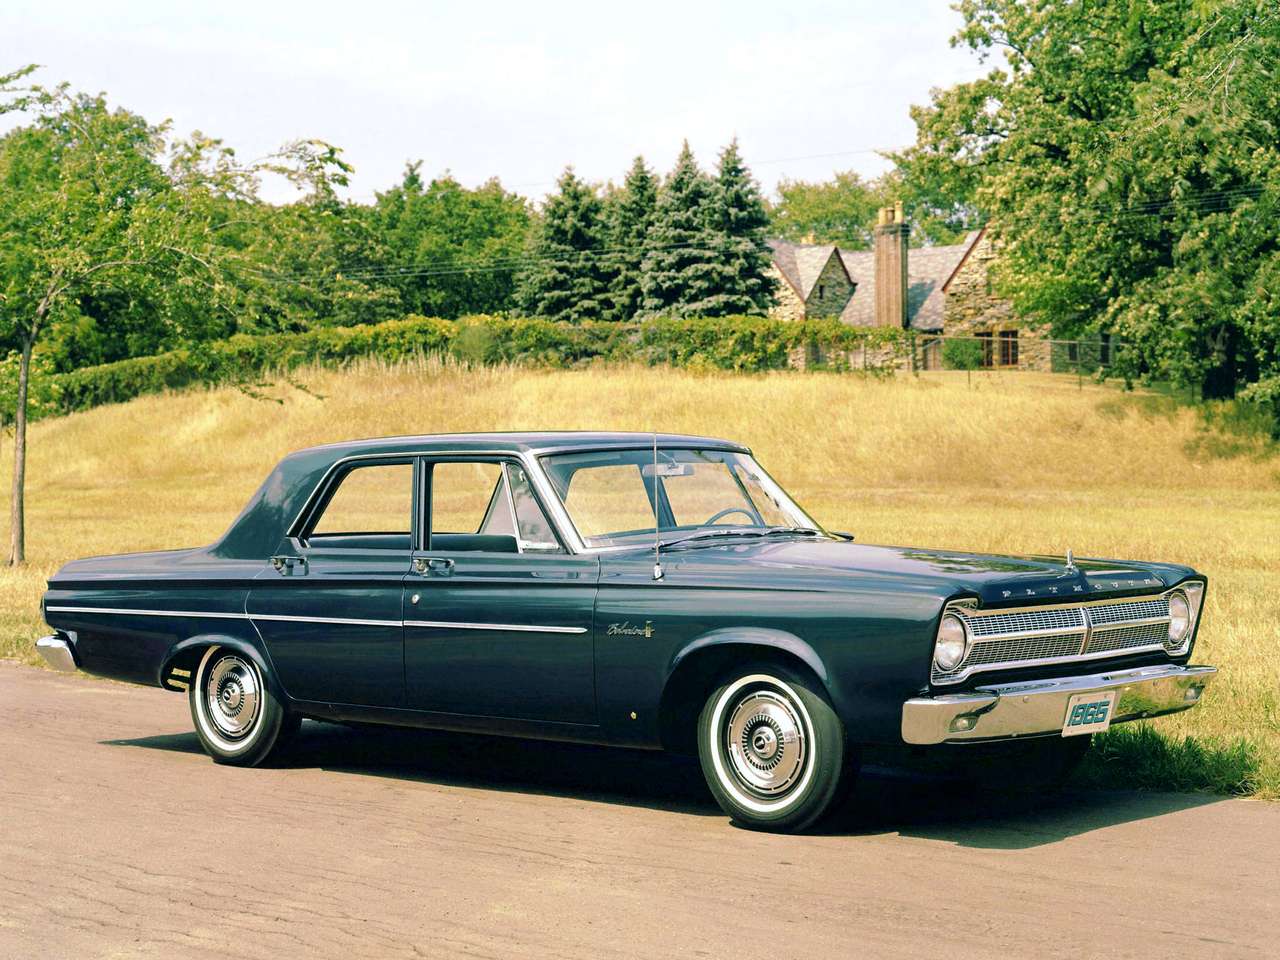 1965 Plymouth Belvedere Sedan puzzle online